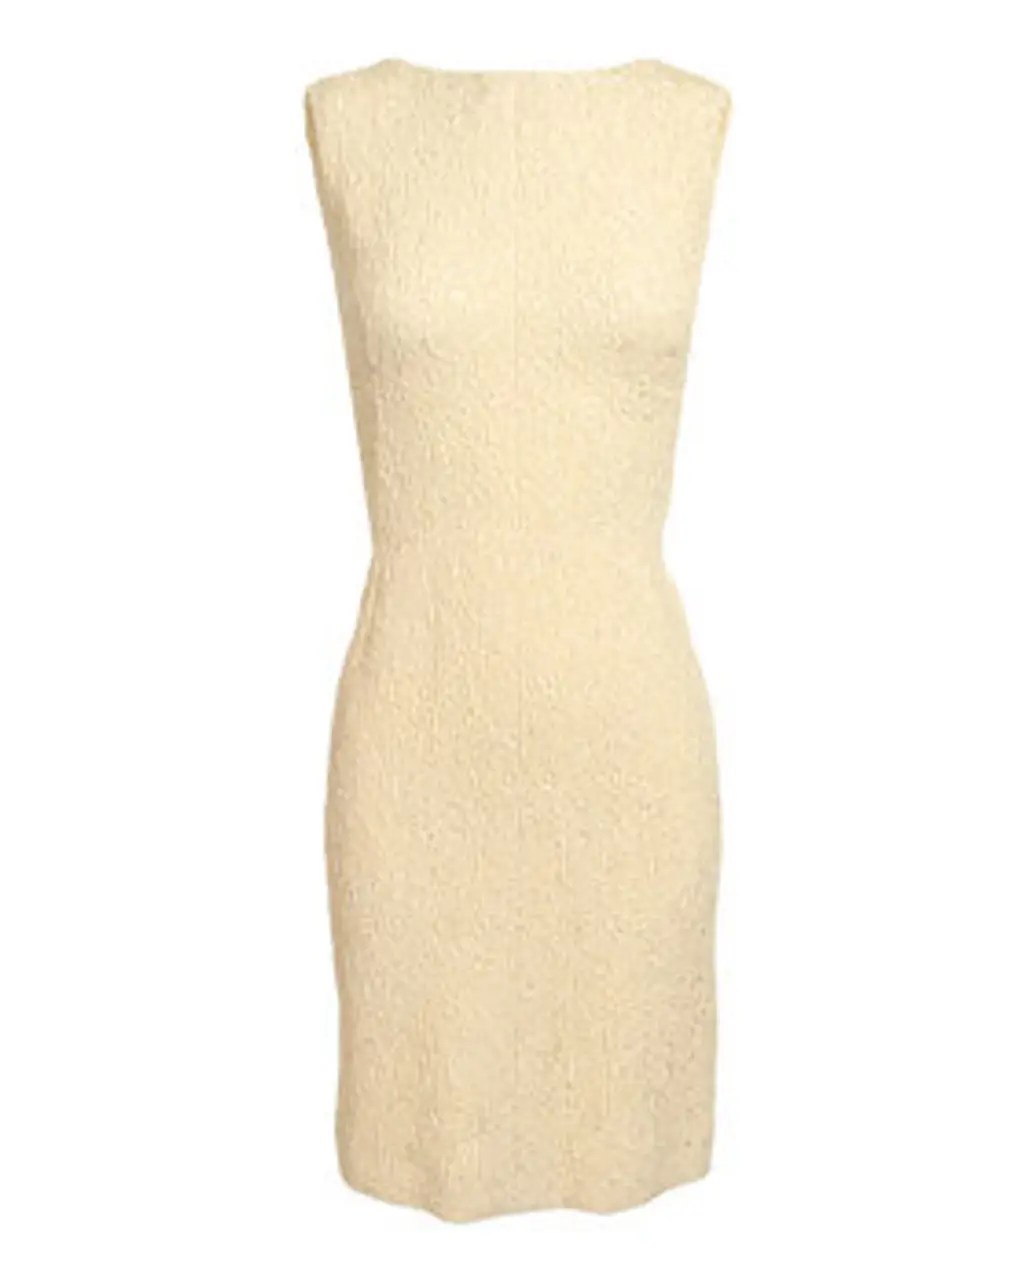 Balenciaga Winter 1964 Textured Dress